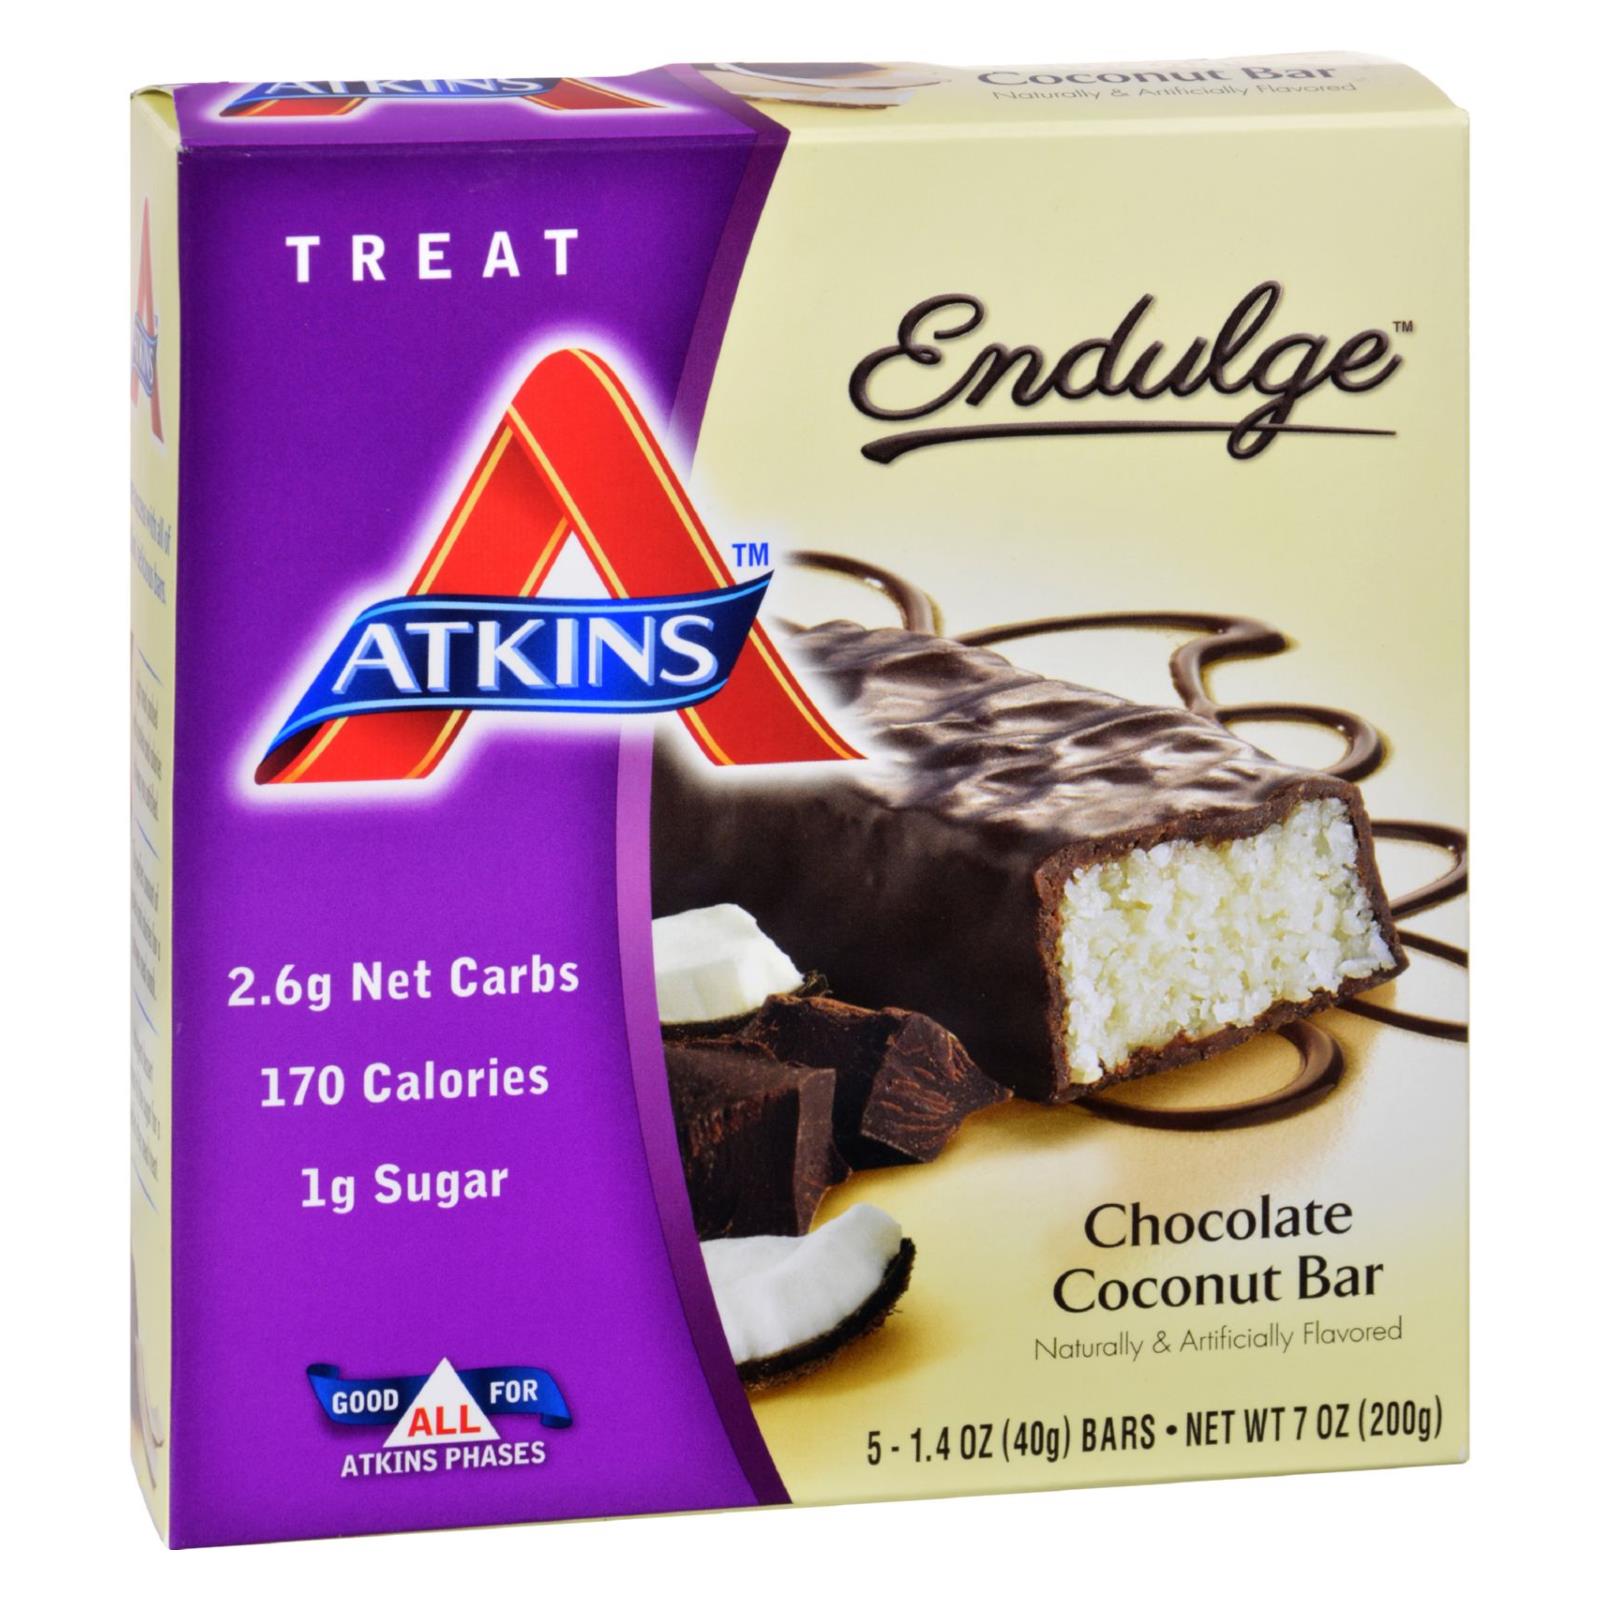 Atkins Endulge Chocolate Coconut Bar - 5-1.4 Oz